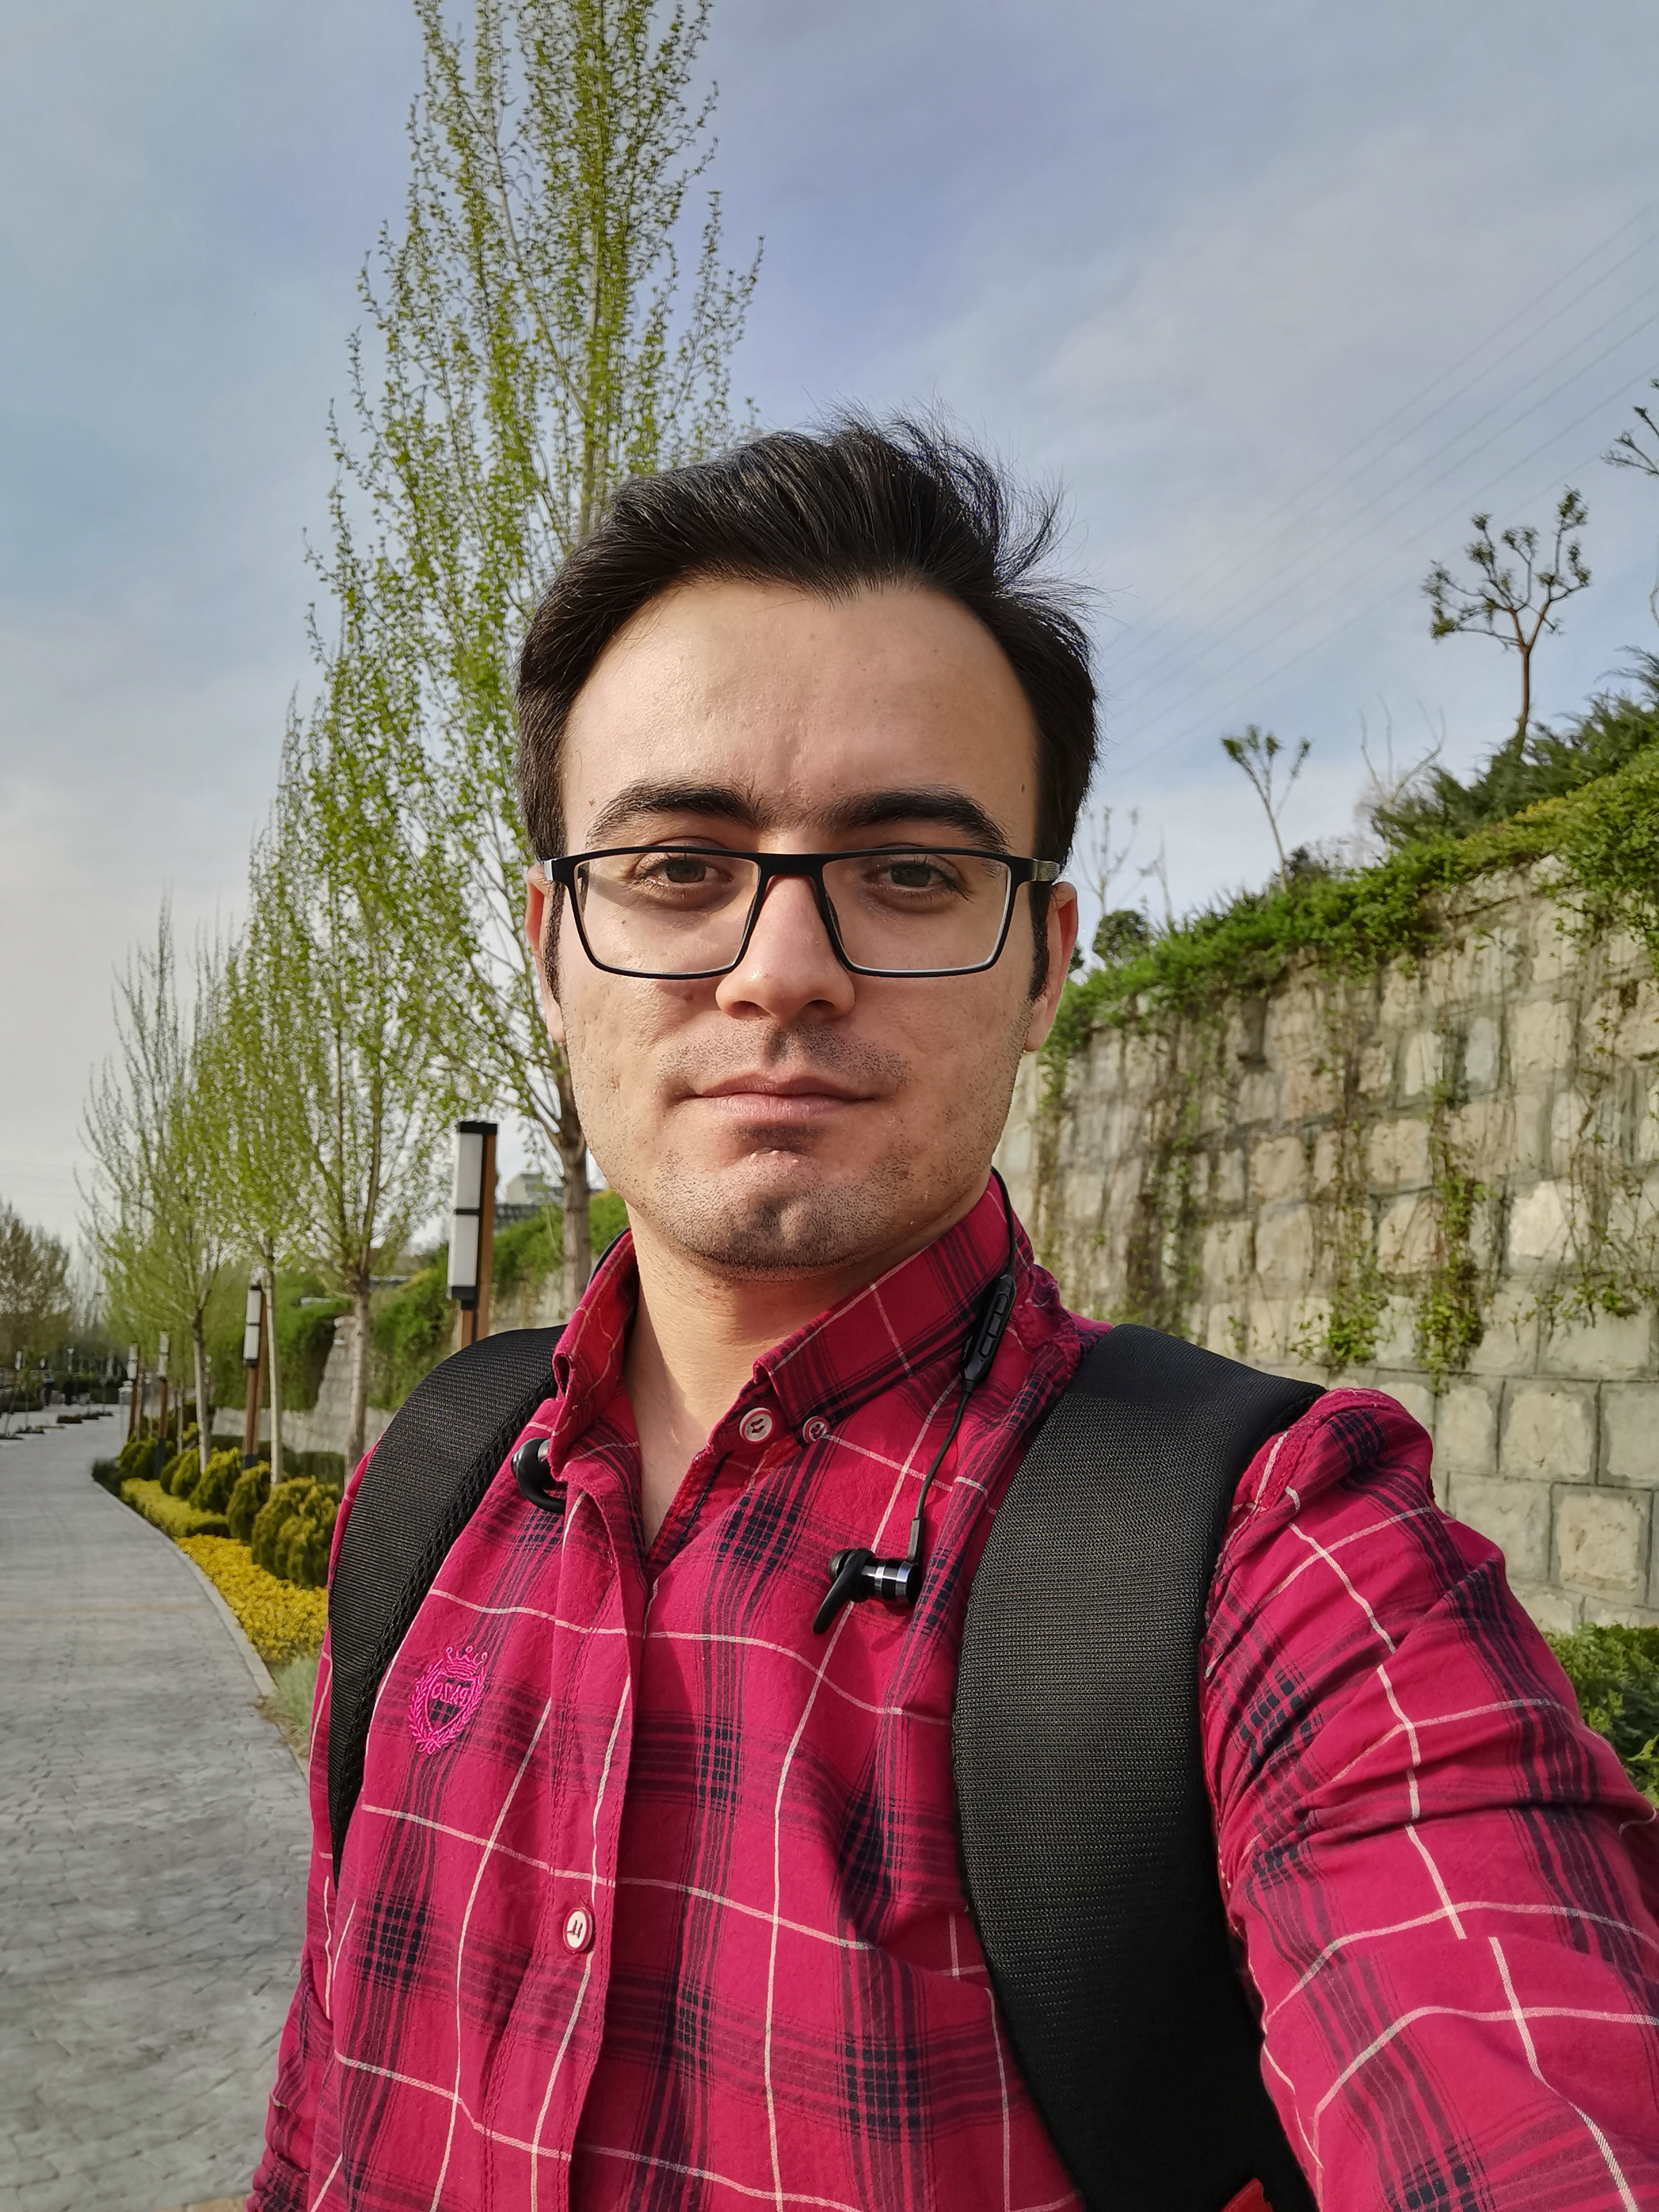 Huawei P30 Pro Selfie - Daylight